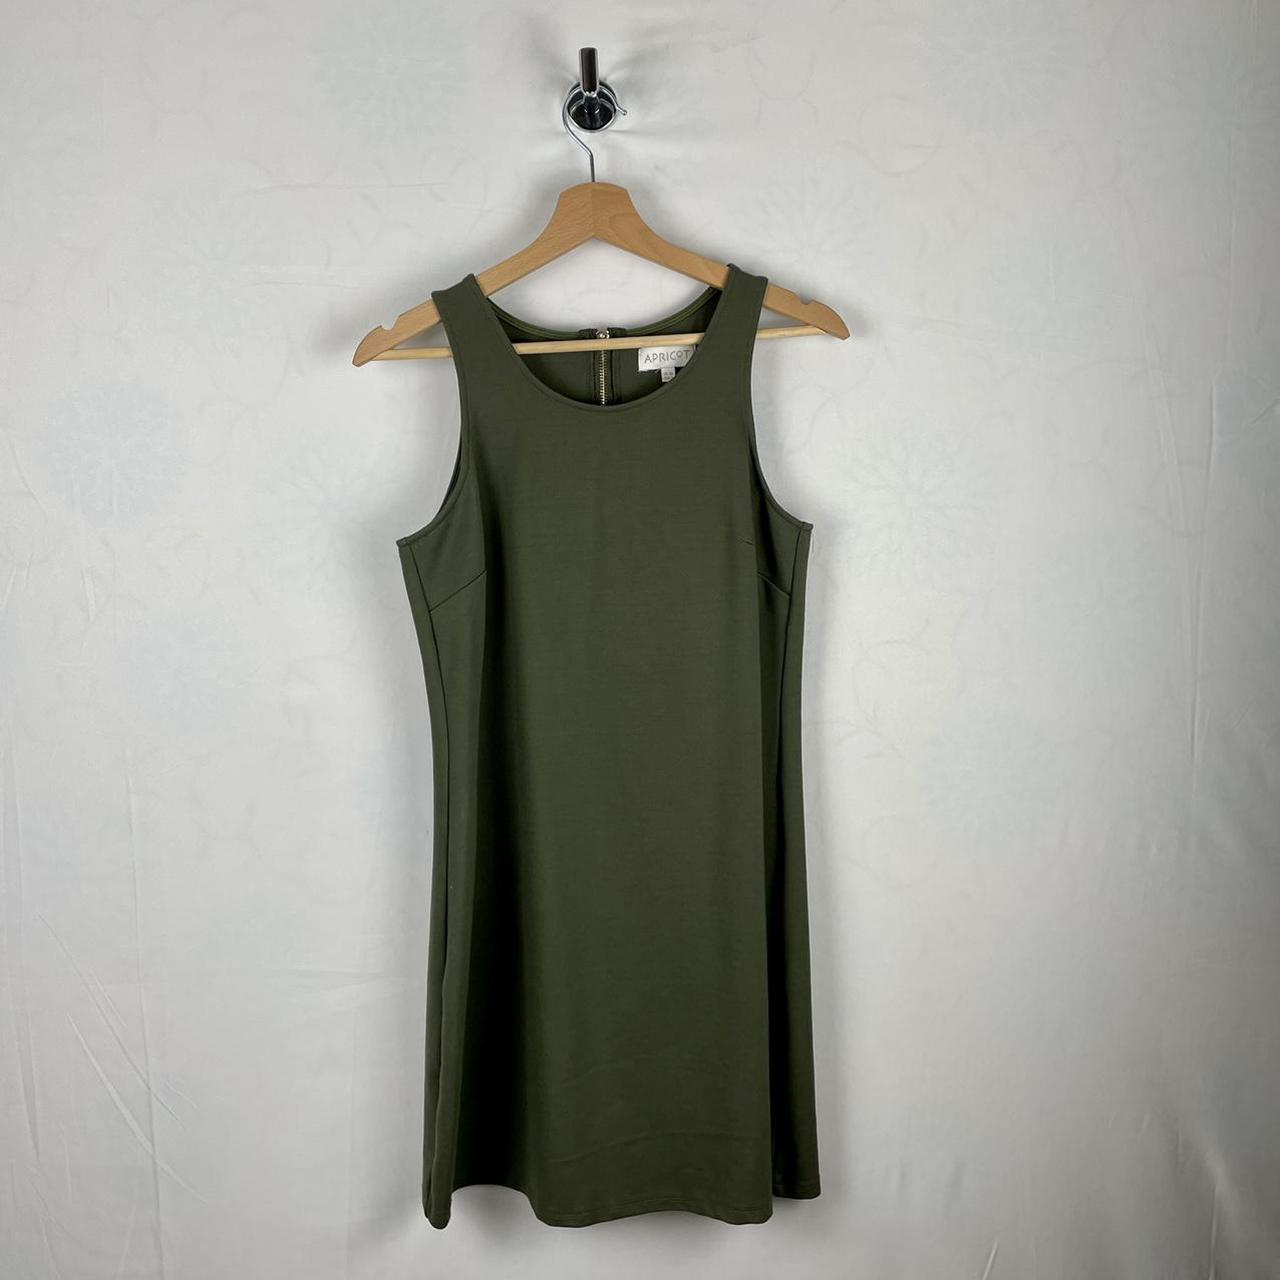 Apricot Women's Khaki and Green Dress | Depop